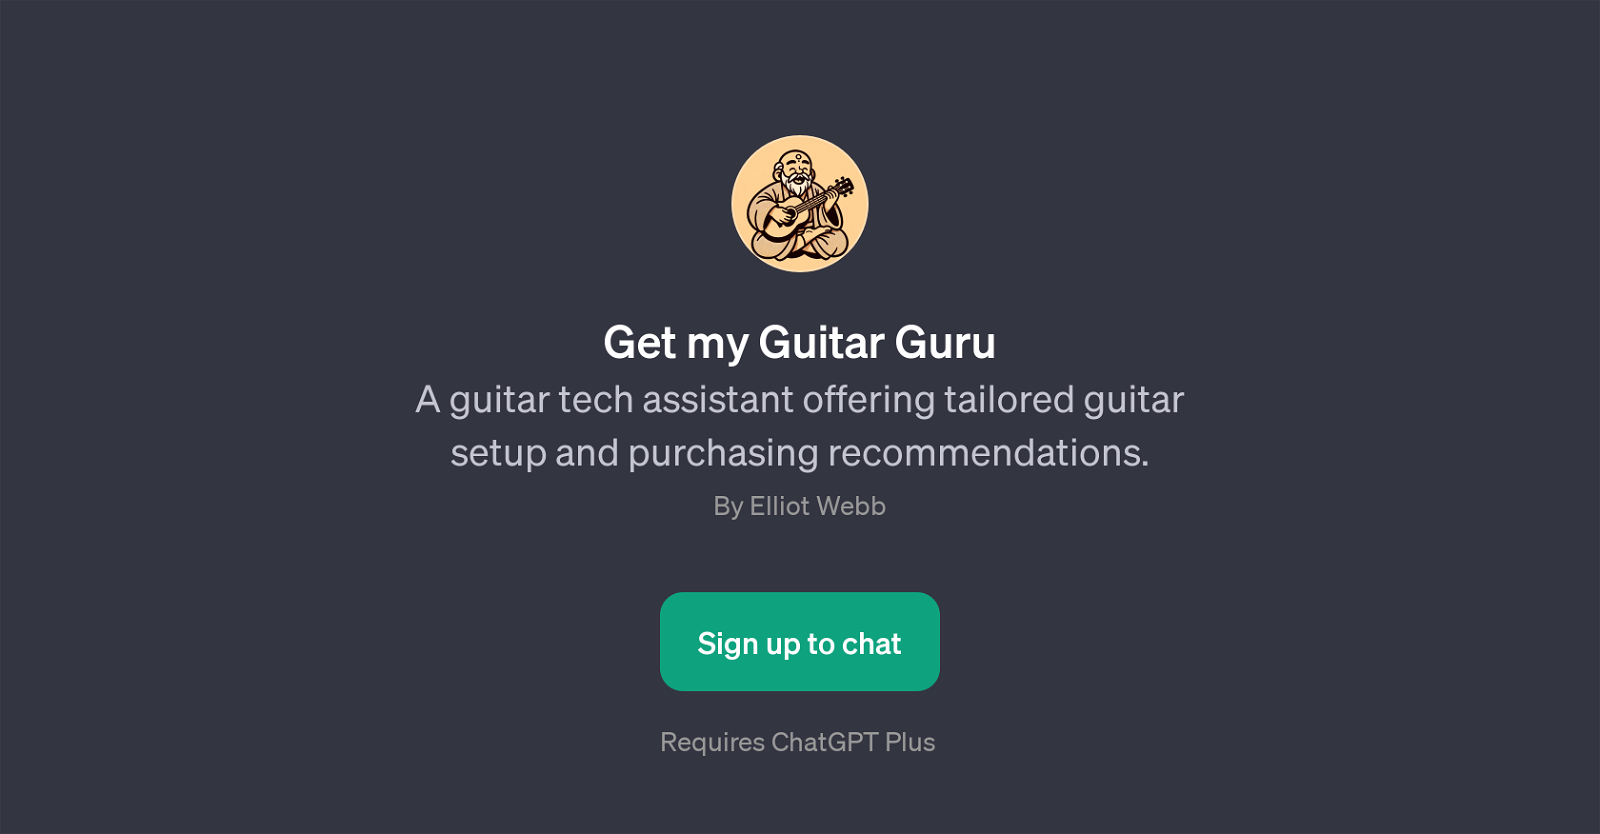 Get my Guitar Guru website